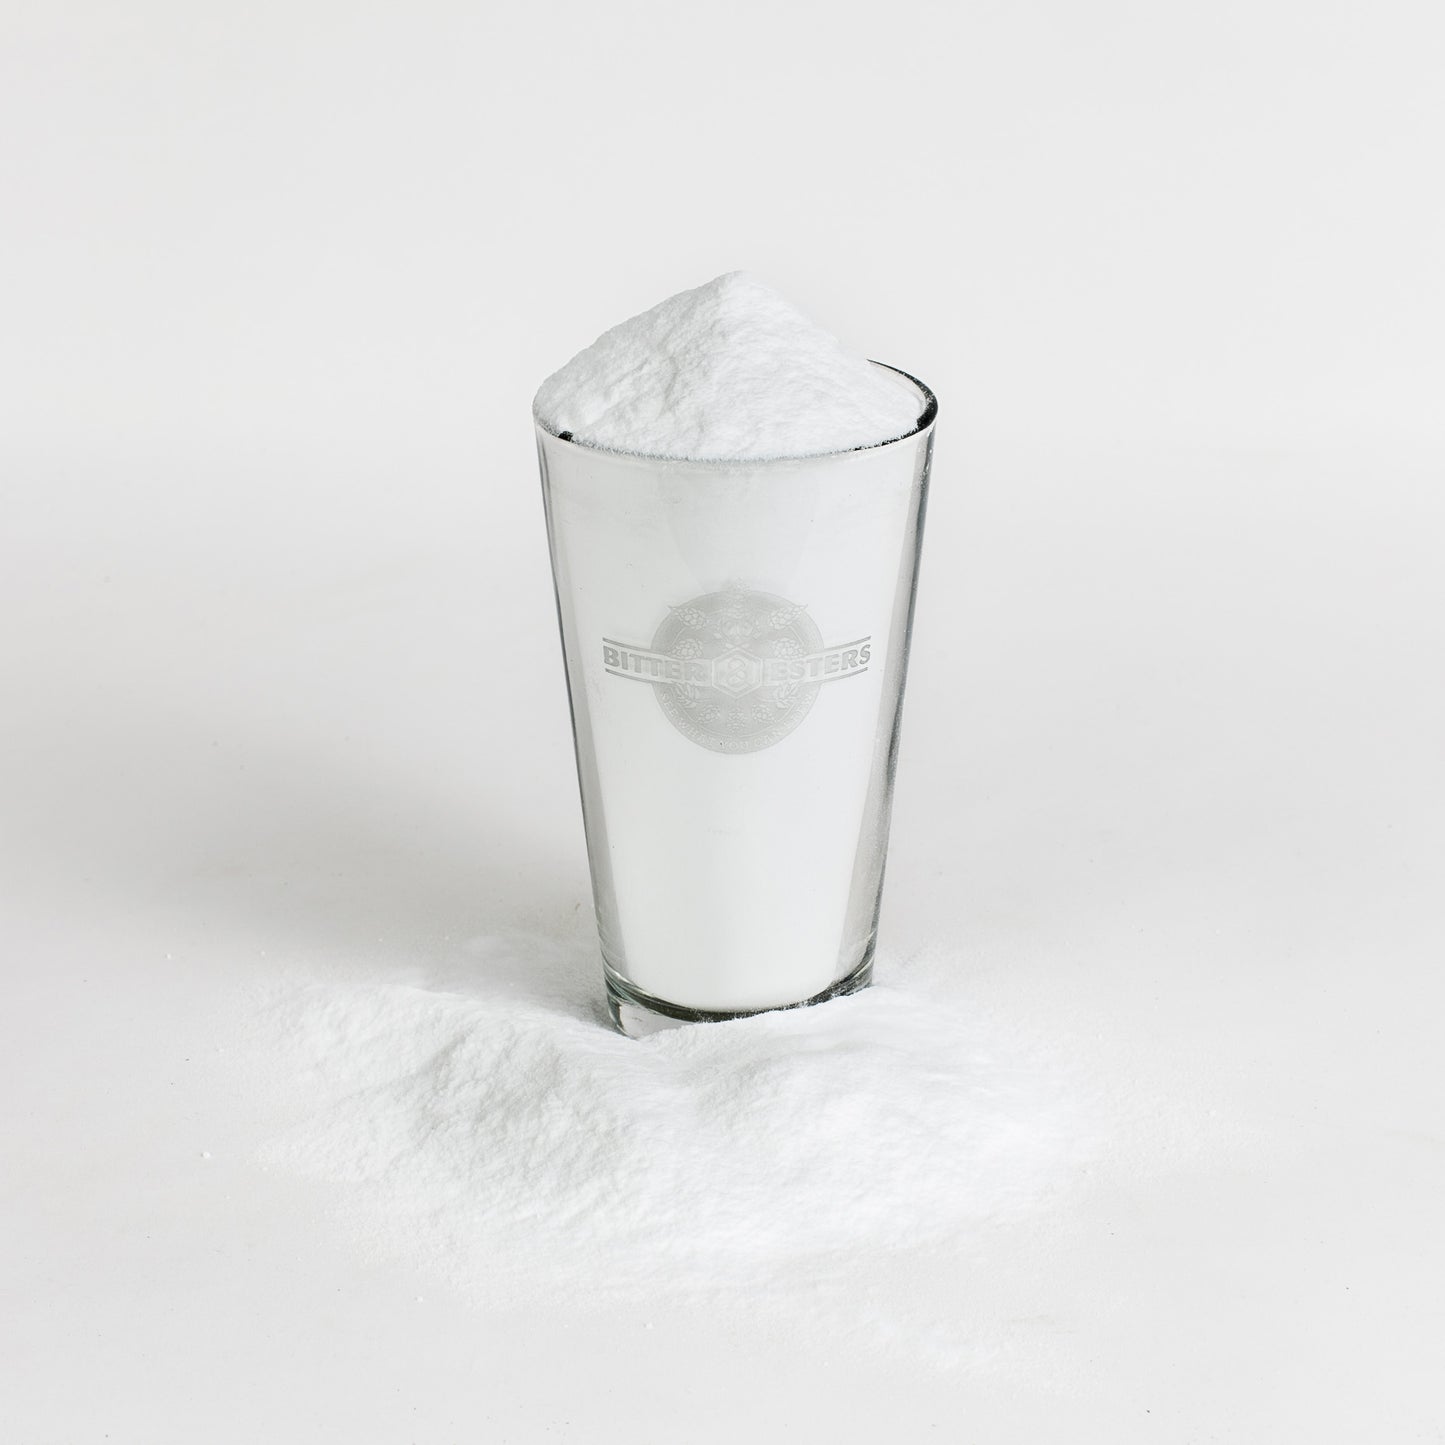 Corn Sugar (Dextrose) - 1 oz